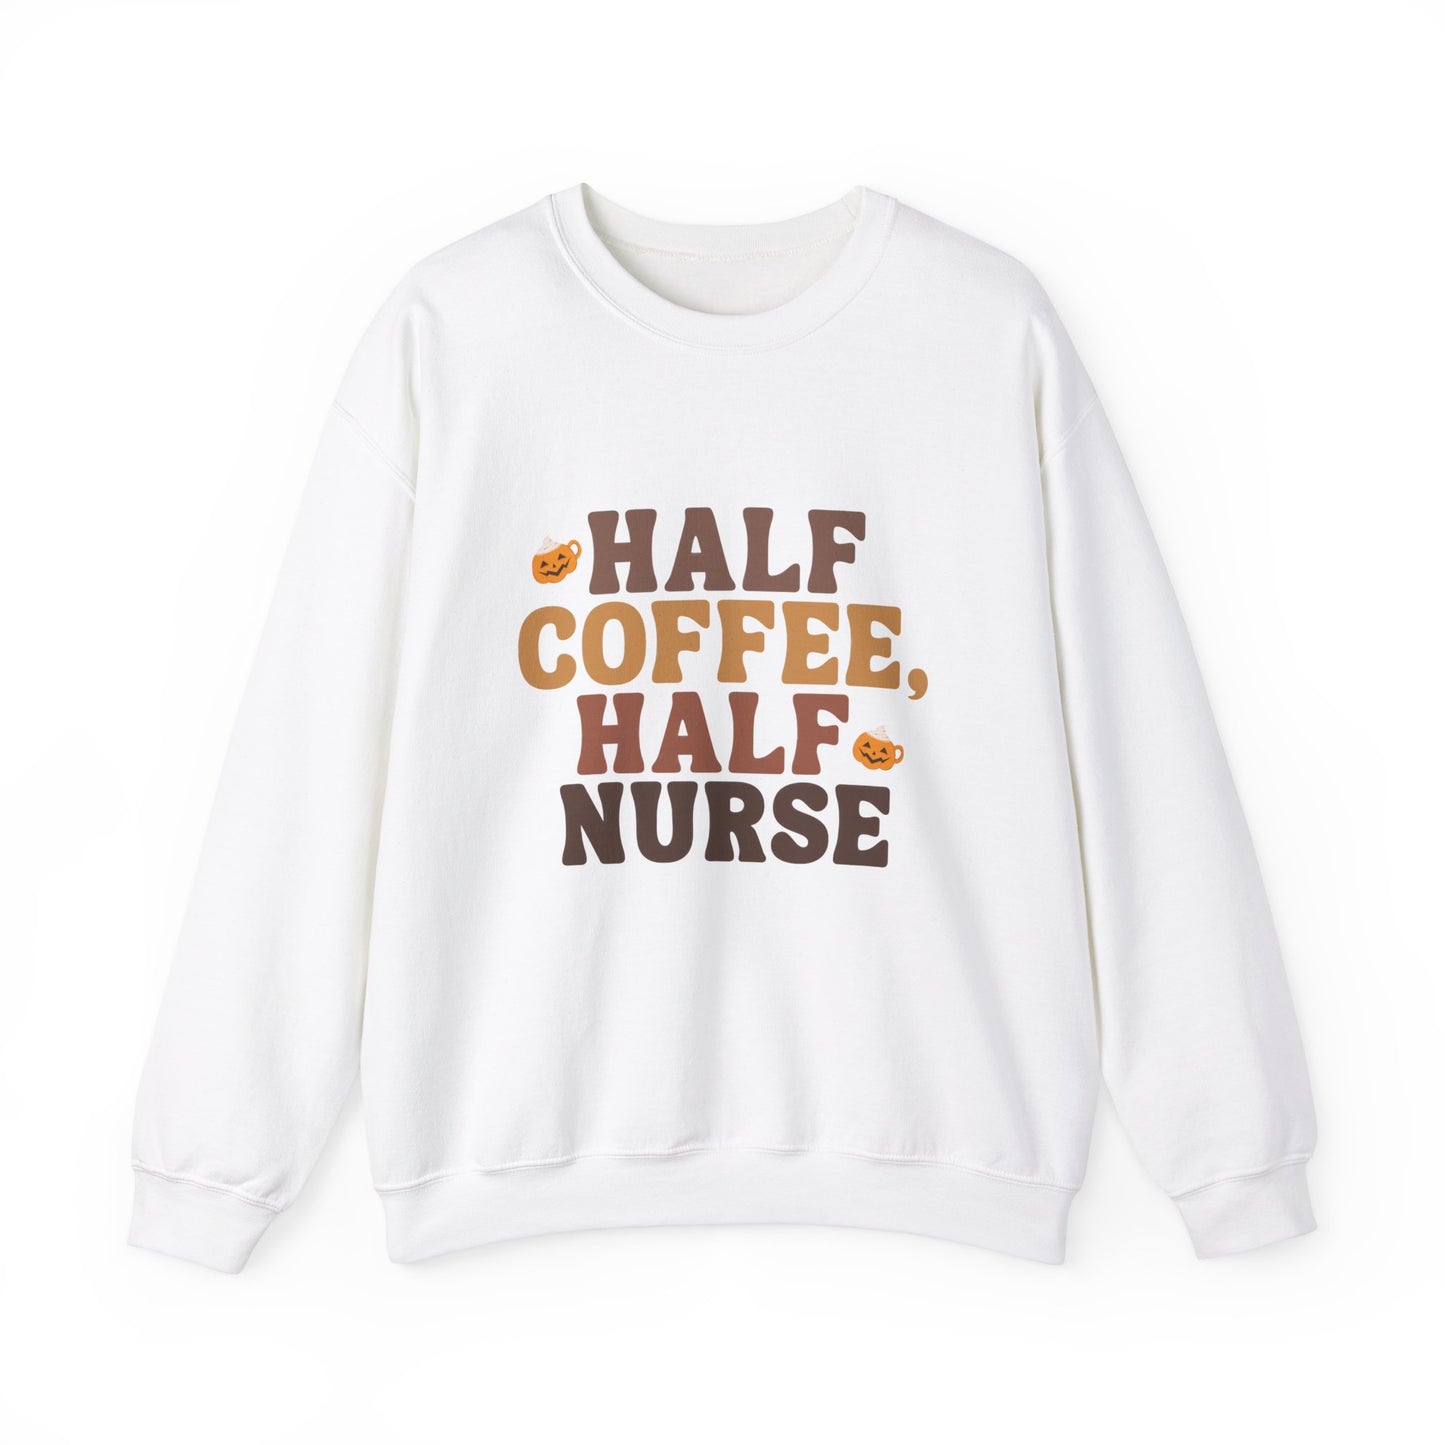 Half Coffee, Half Nurse Crewneck Sweatshirt, Perfect For Nurse Week, Students, Nurse Graduates, Registered Nurses, ER Nurses, Paediatric, Oncology, NICU, Nurse Retirement, Perfect Cozy Sweater For Thanksgiving Or Christmas & Holidays